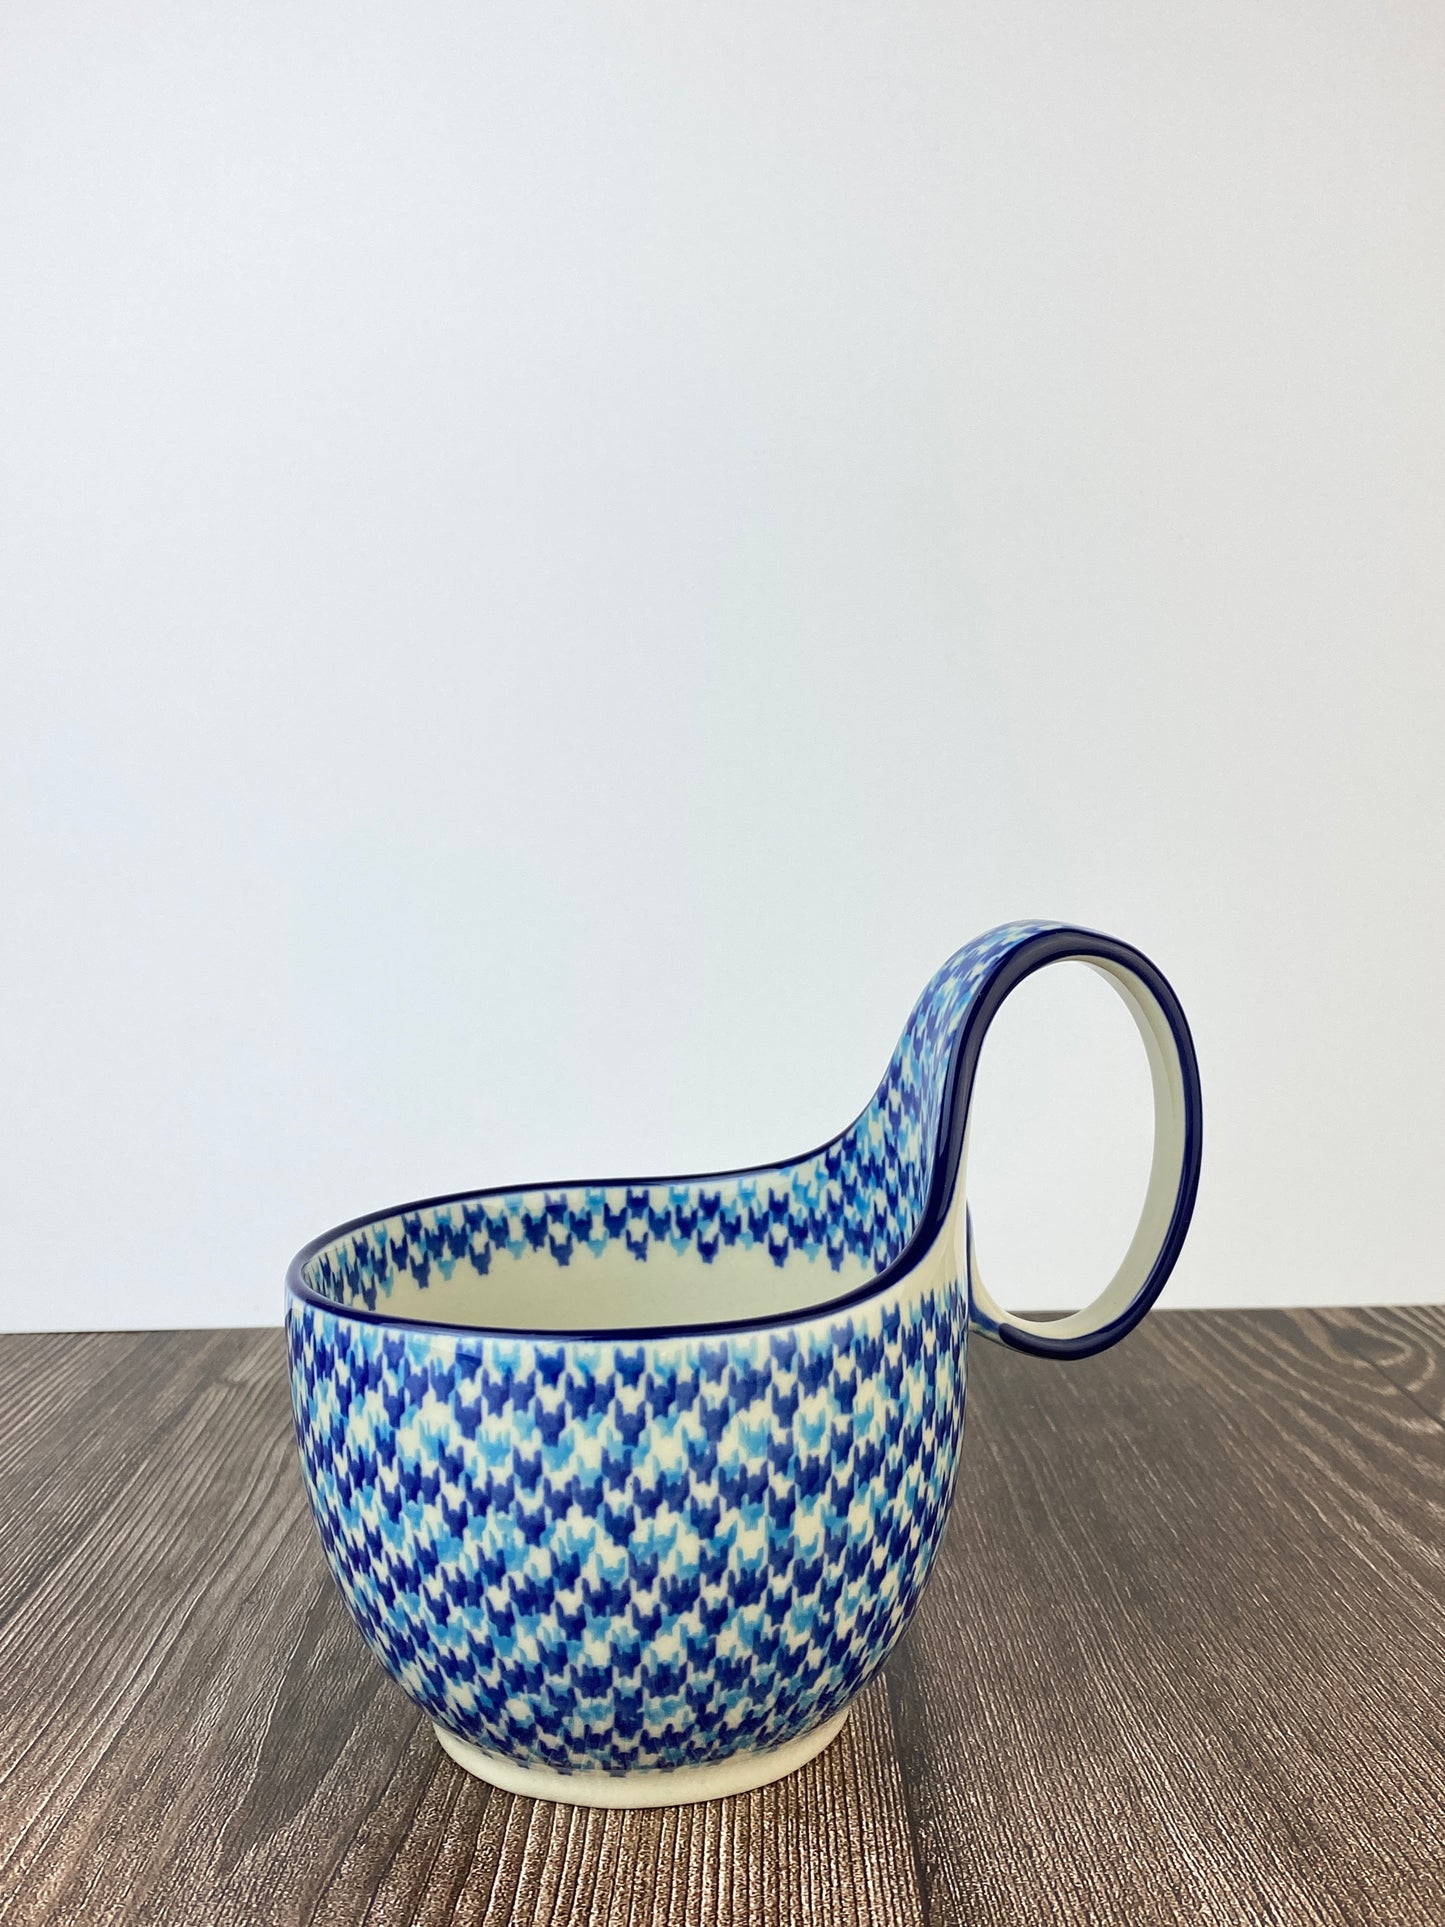 SALE Soup Mug - Shape 845 - Pattern 2299